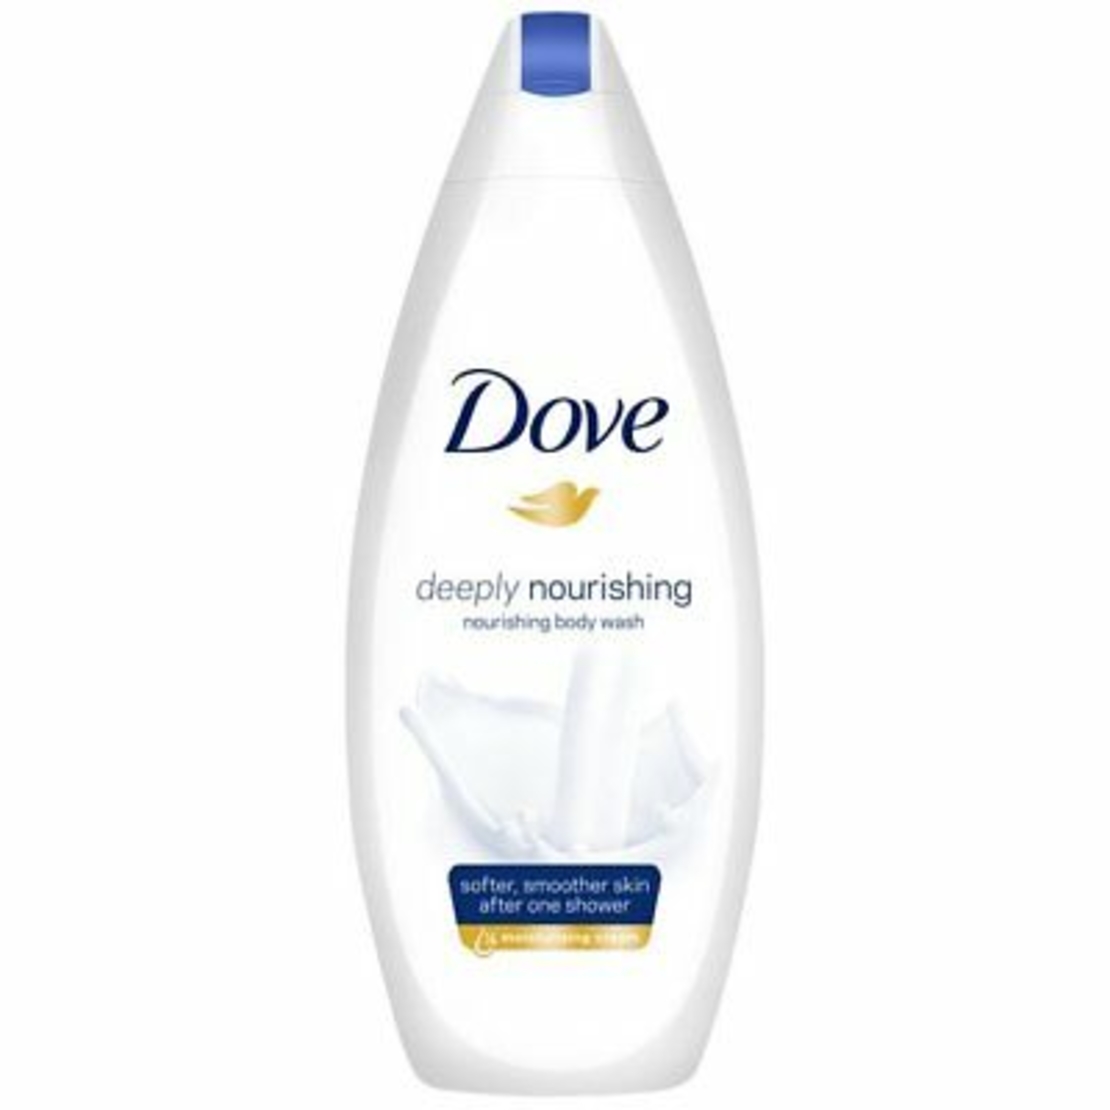 Dove -Deeply nourishing Body Wash 750ml